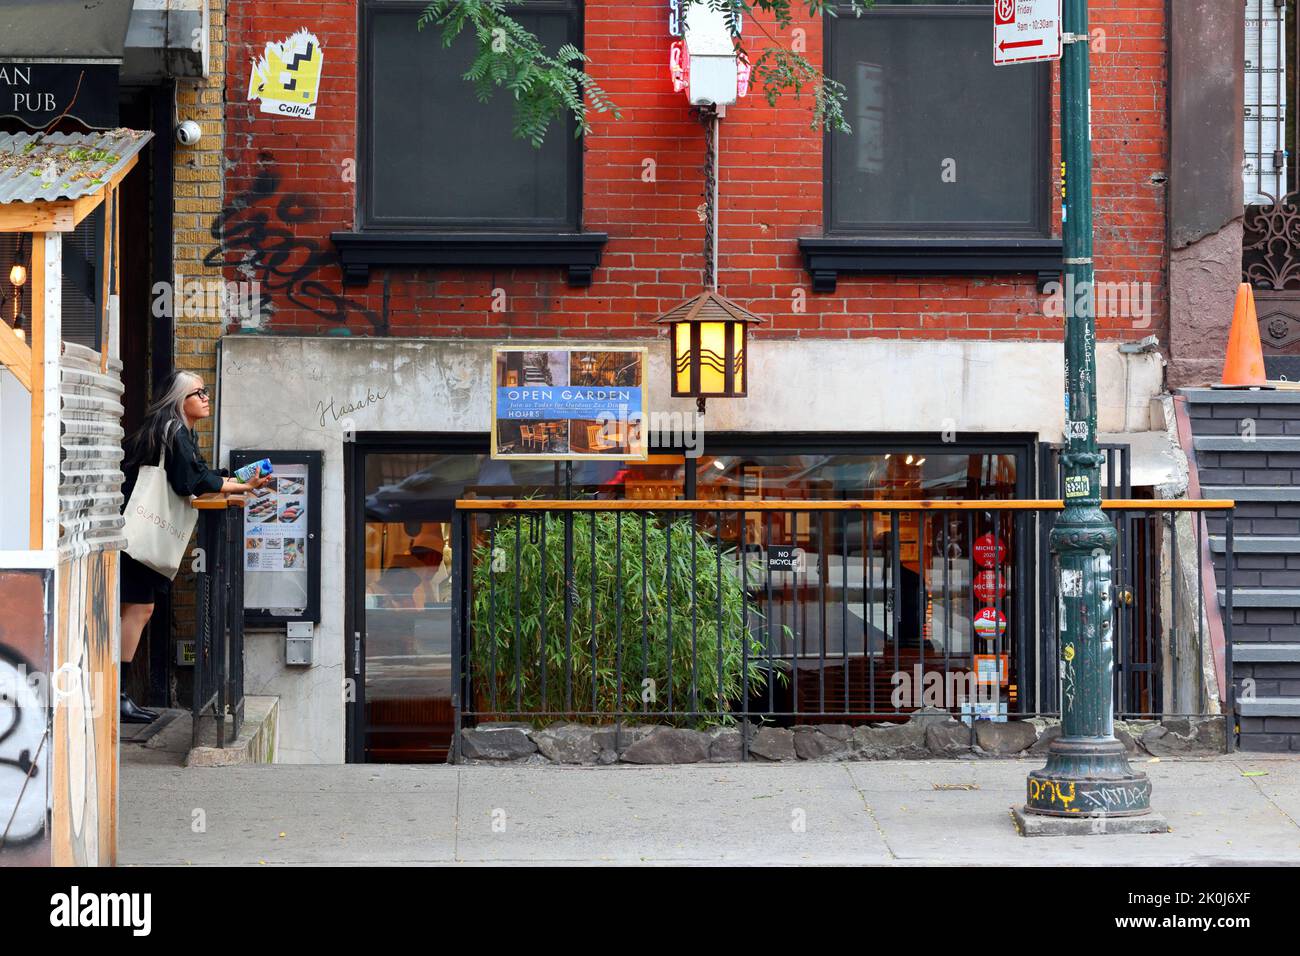 Hasaki, 210 E 9th St, New York, NYC storefront photo of a Japanese restaurant in Manhattan's East Village neighborhood. Stock Photo